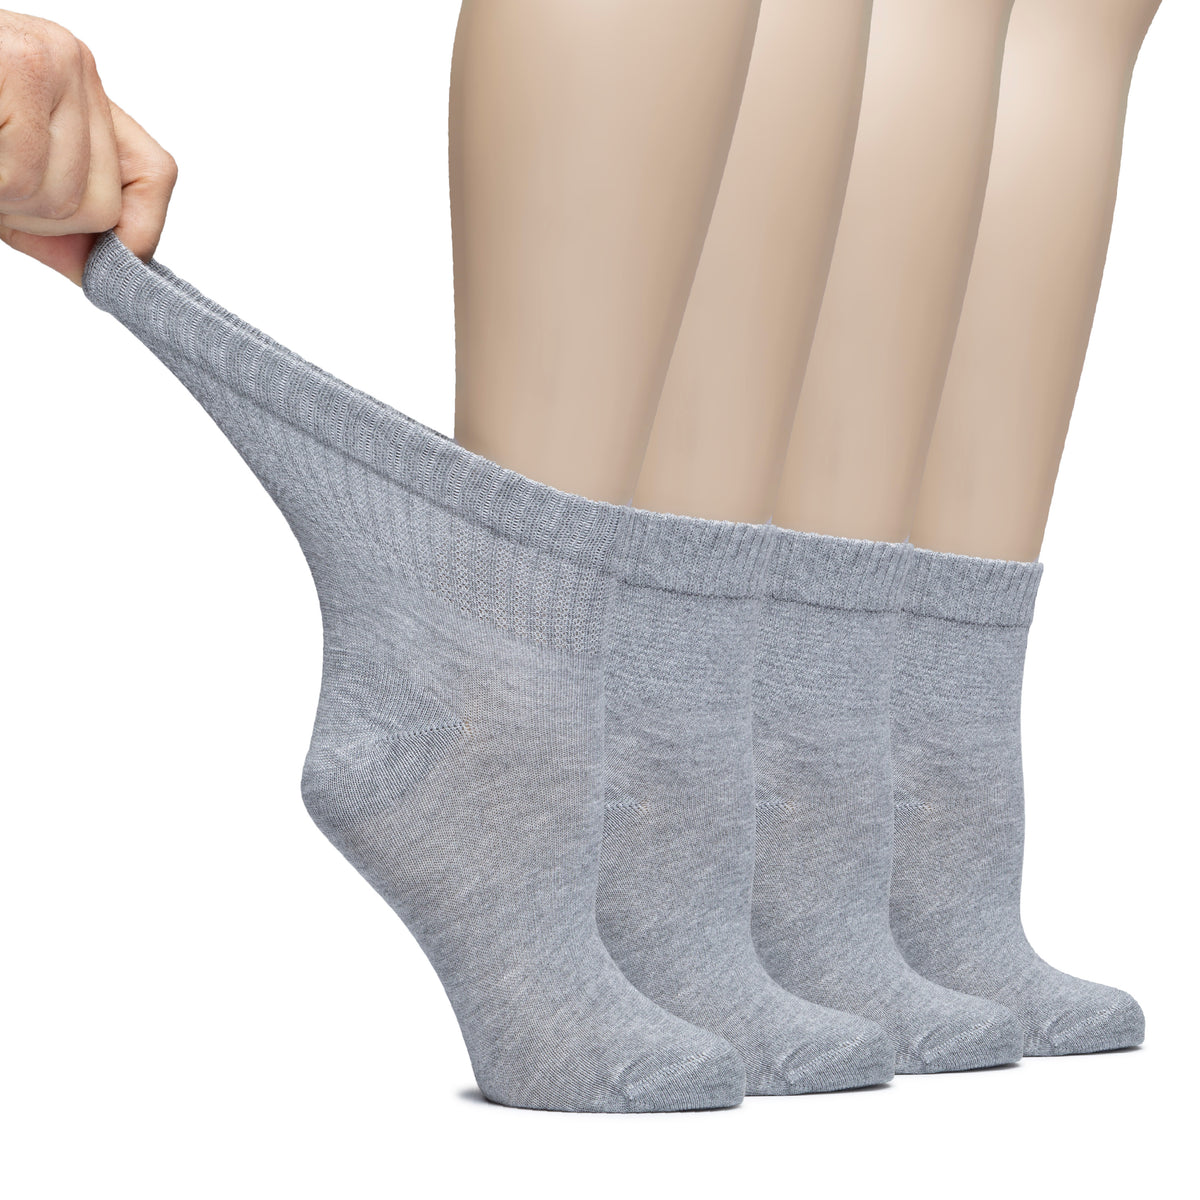 Hugh Ugoli Lightweight Women's Diabetic Ankle Socks Bamboo Thin Socks Seamless Toe and Non-Binding Top, 4 Pairs, , Shoe Size: 6-9/10-12 | Shoe Size: 10-12 | Light Grey New